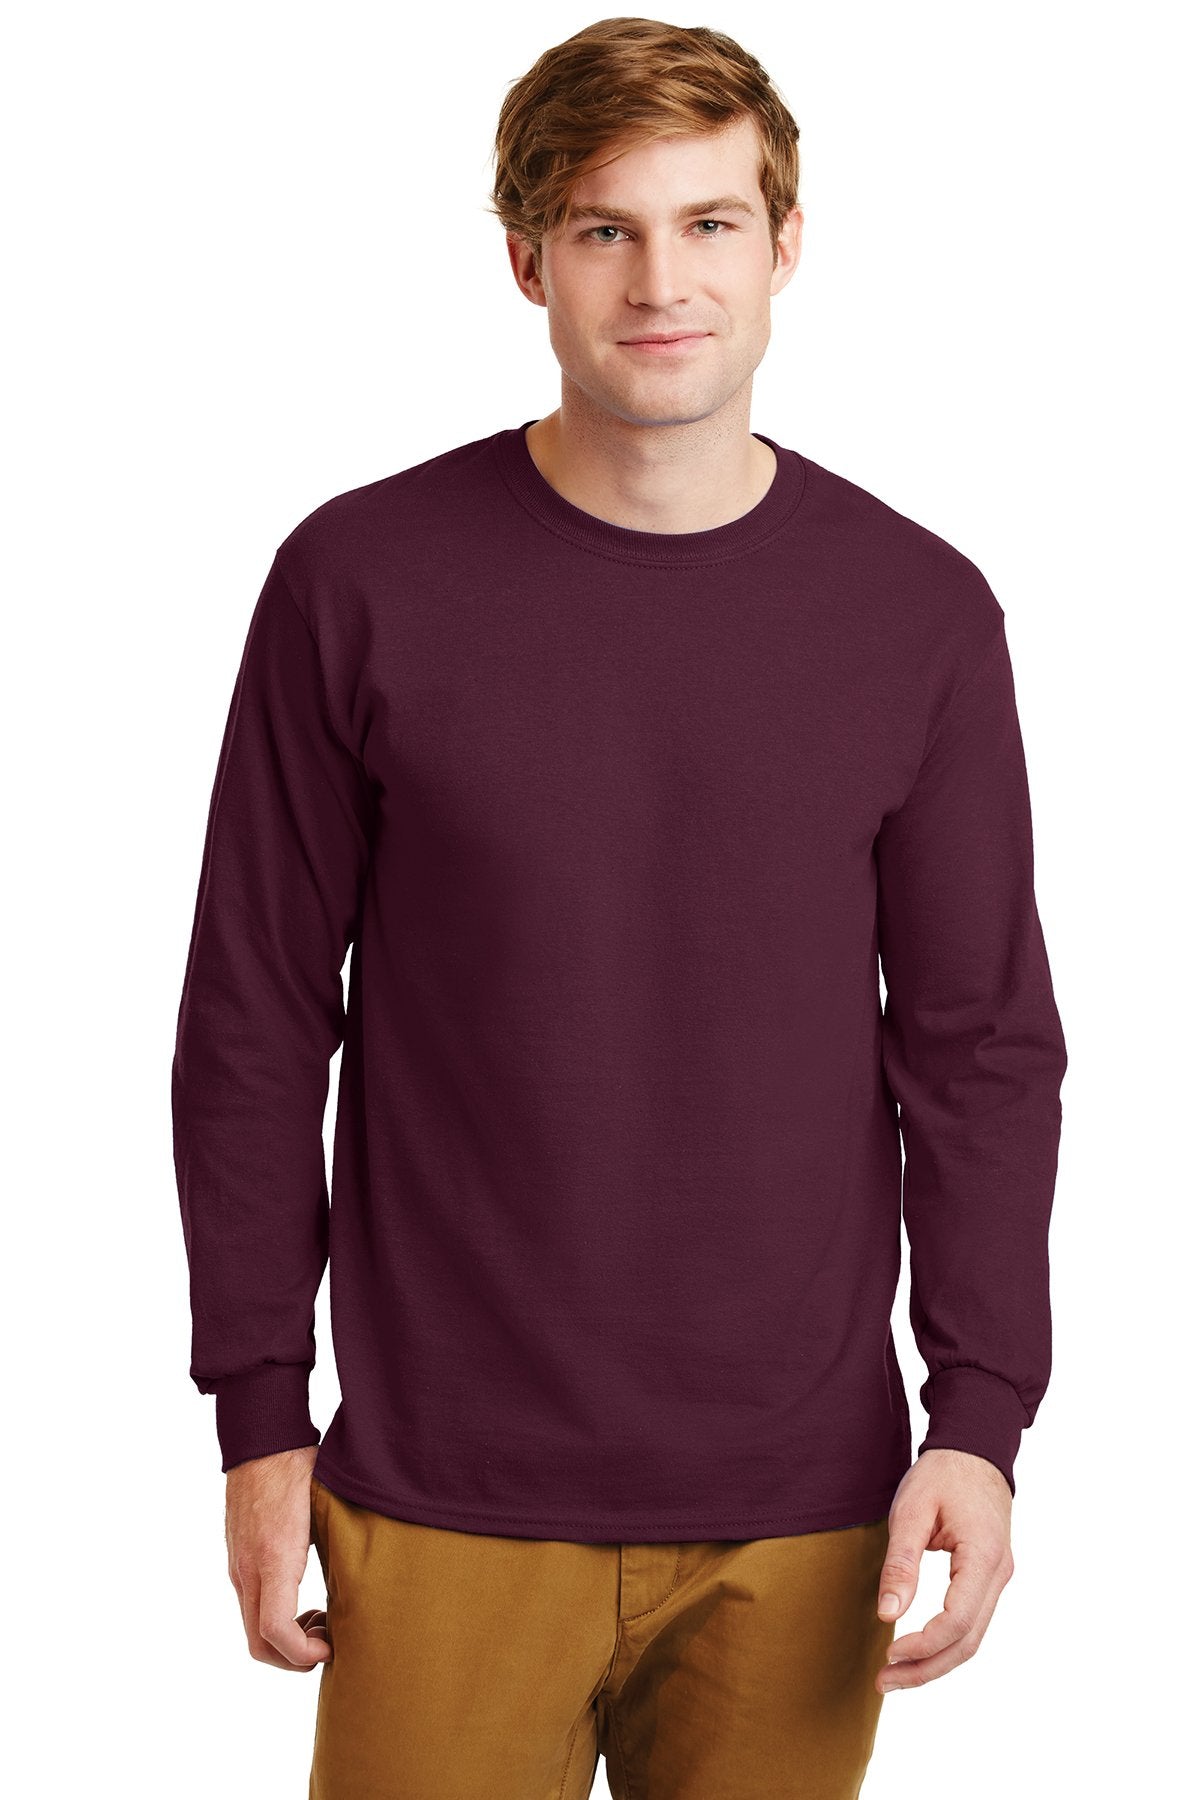 Gildan Ultra Cotton Long Sleeve T Shirt in Maroon, add a custom design